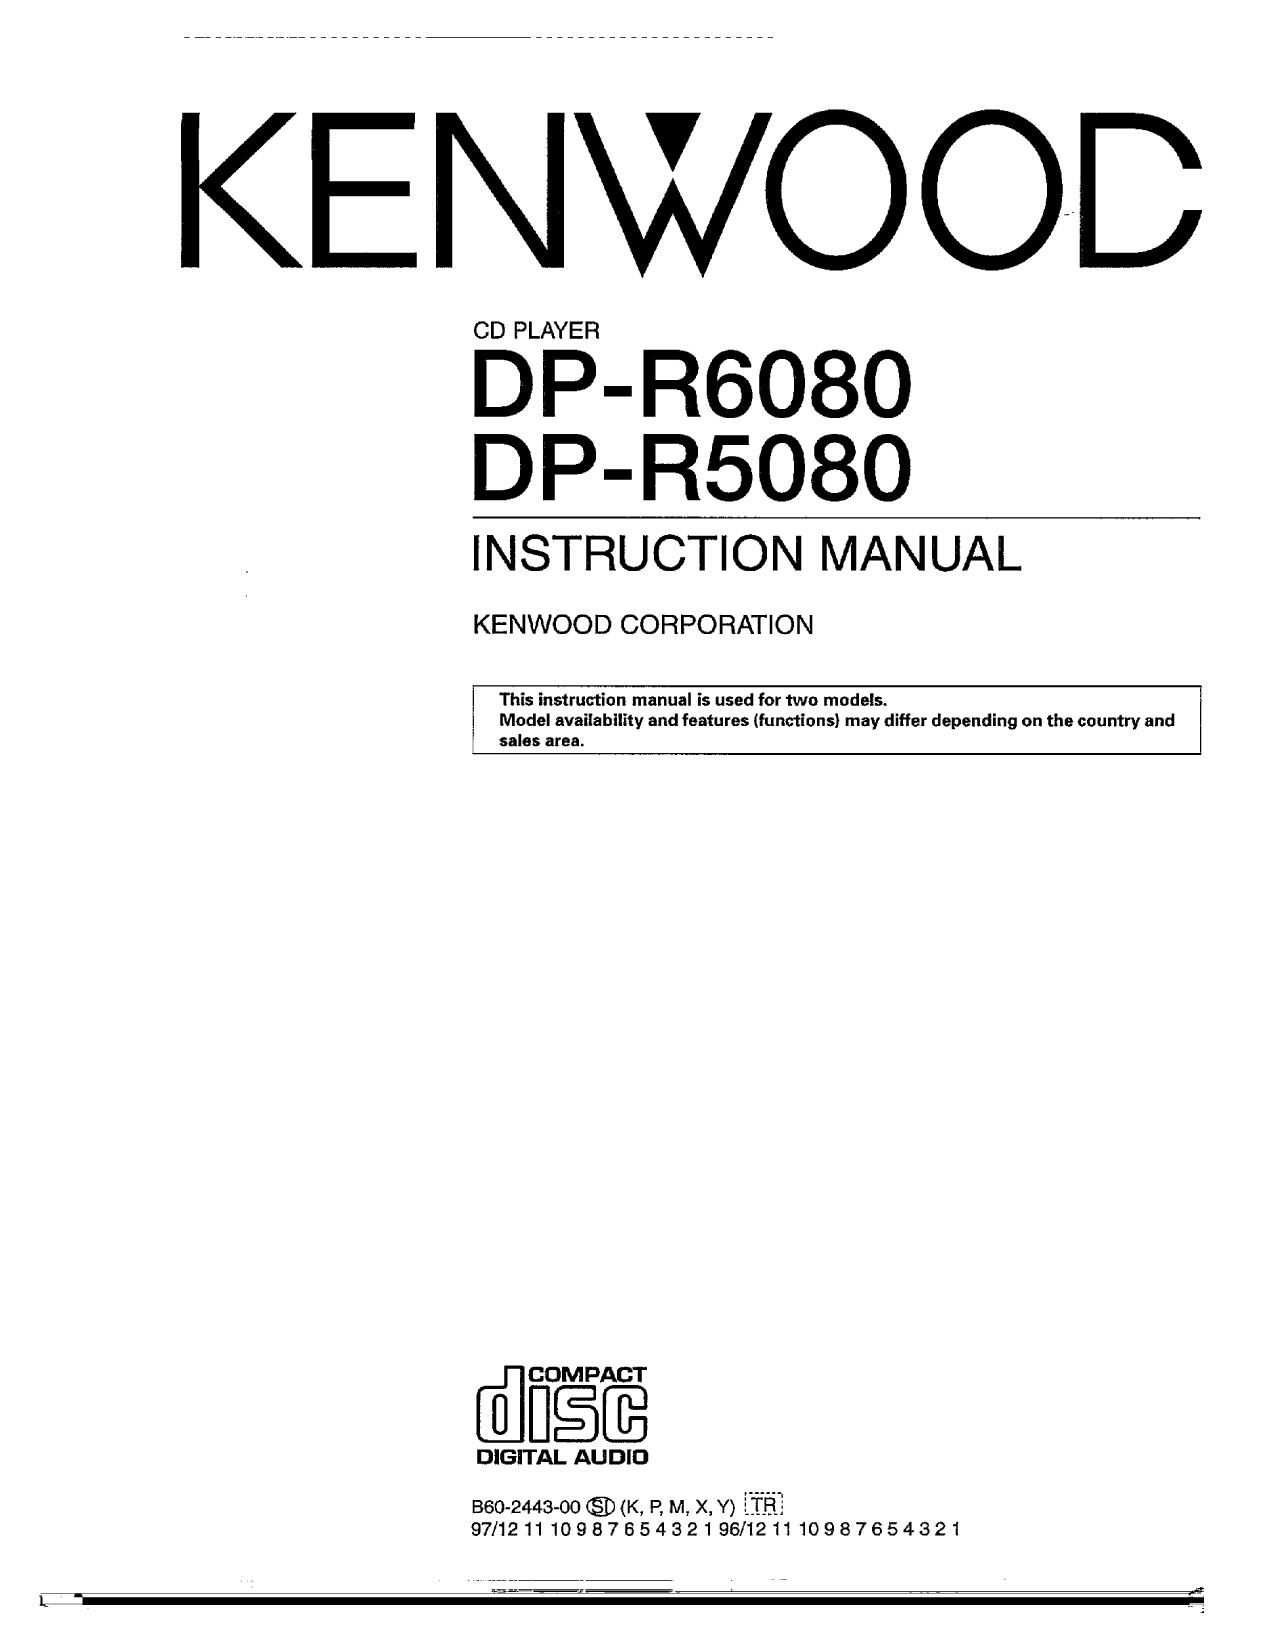 Kenwood DPR 6080 Owners Manual